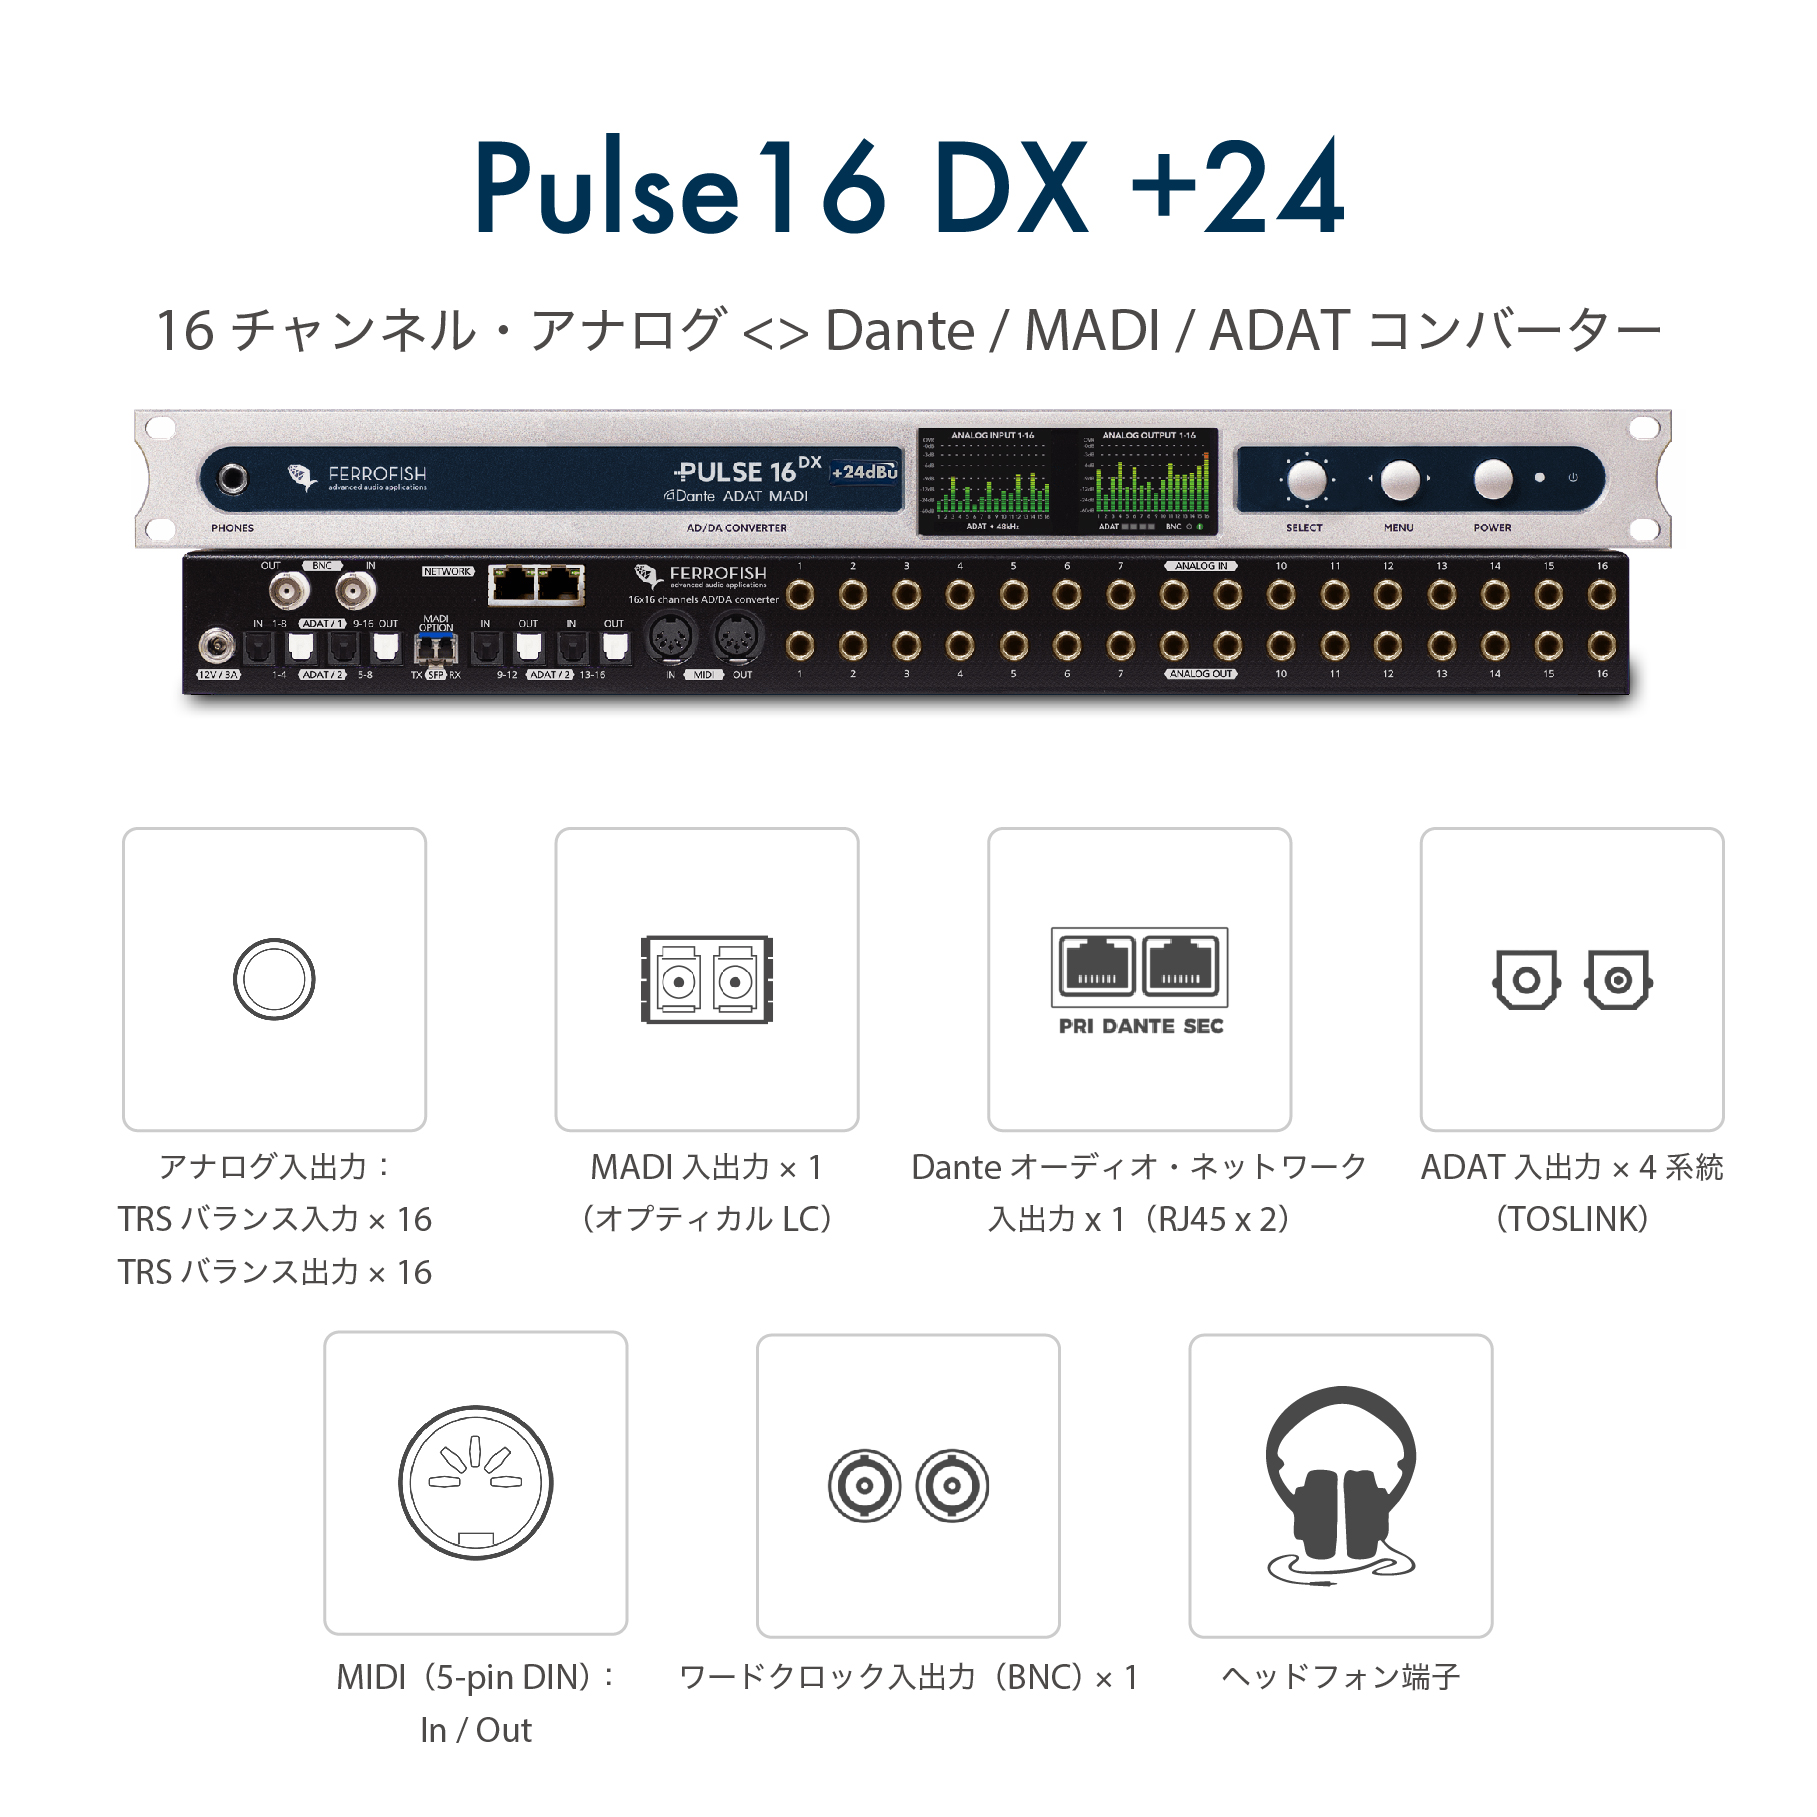 Pulse16 DX +24